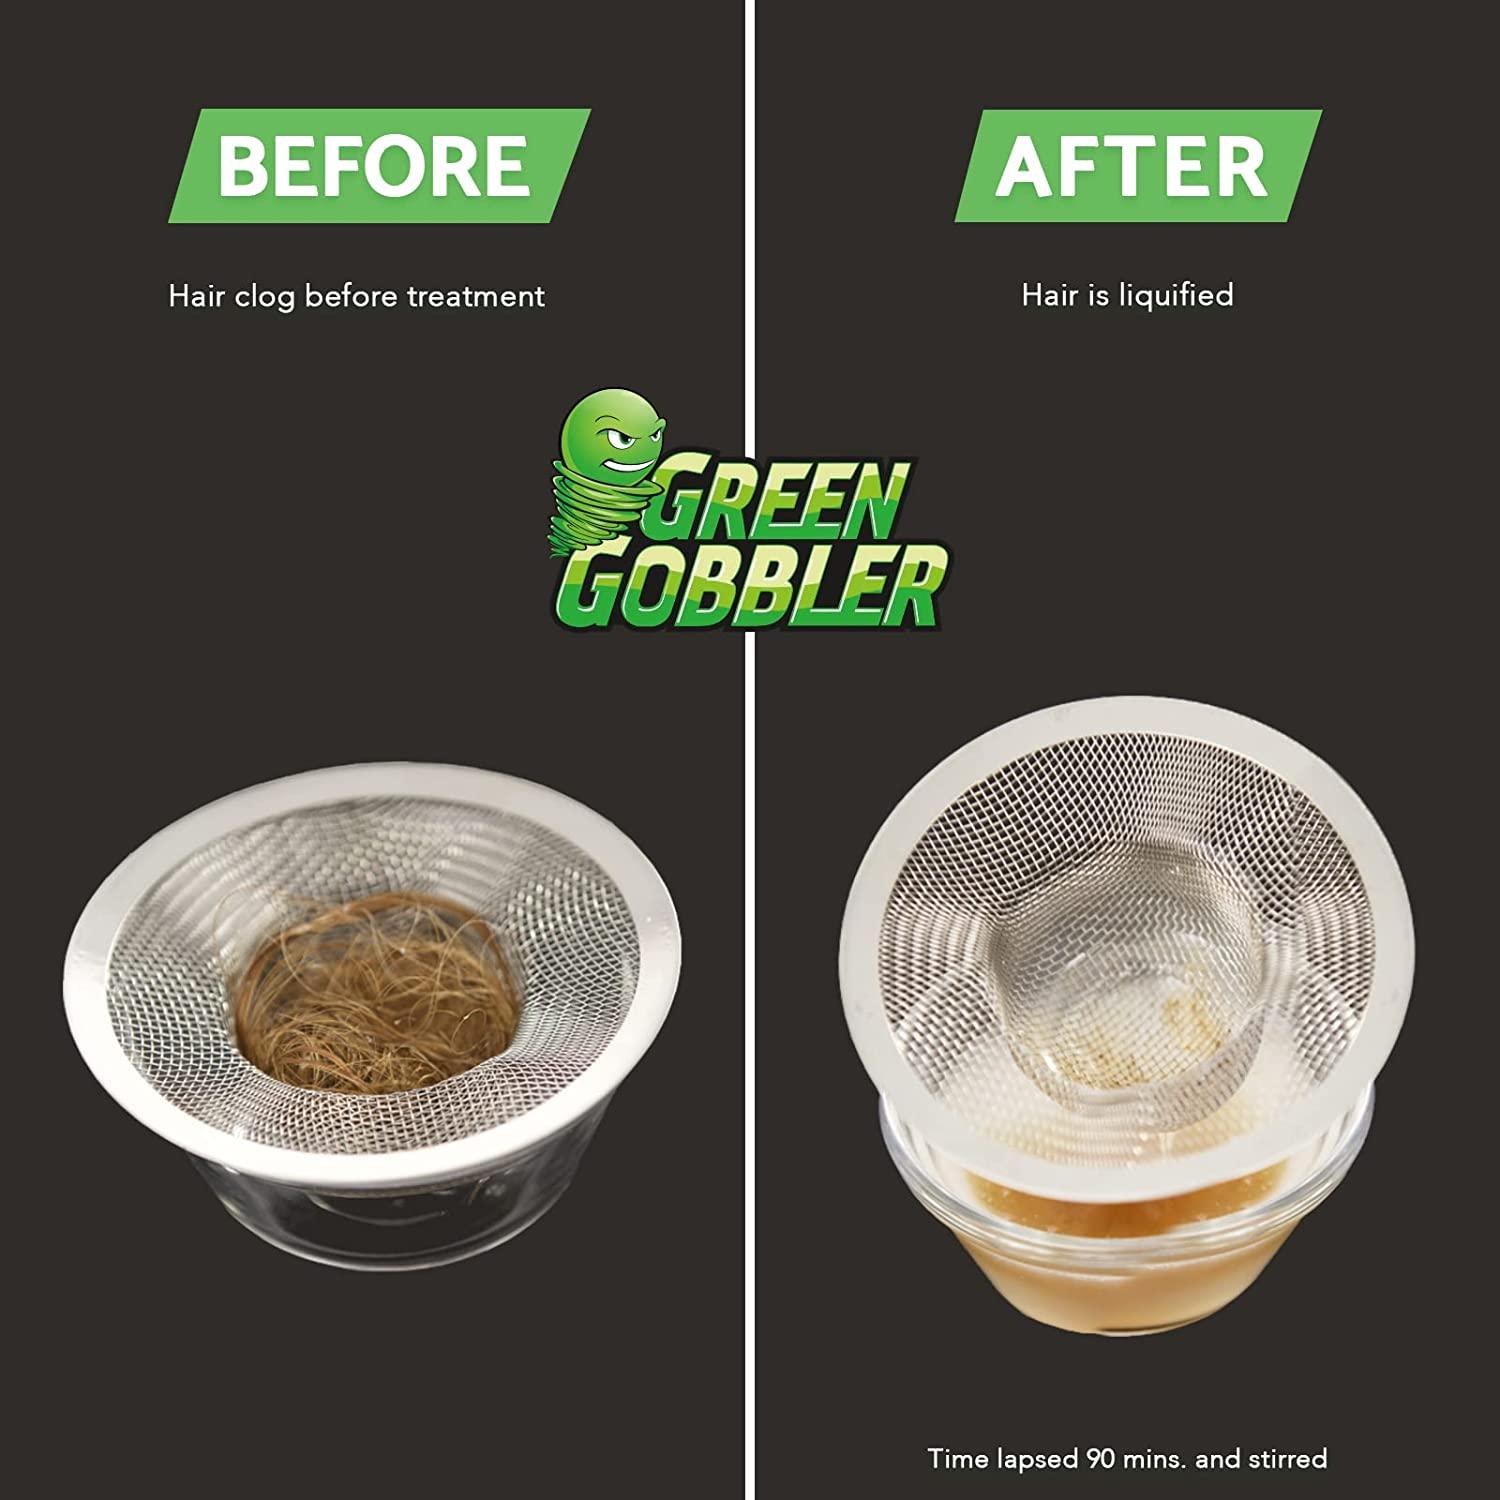 Green Gobbler DRAIN OPENER PACS, Hair Clog Remover, Toilet Clog Remover